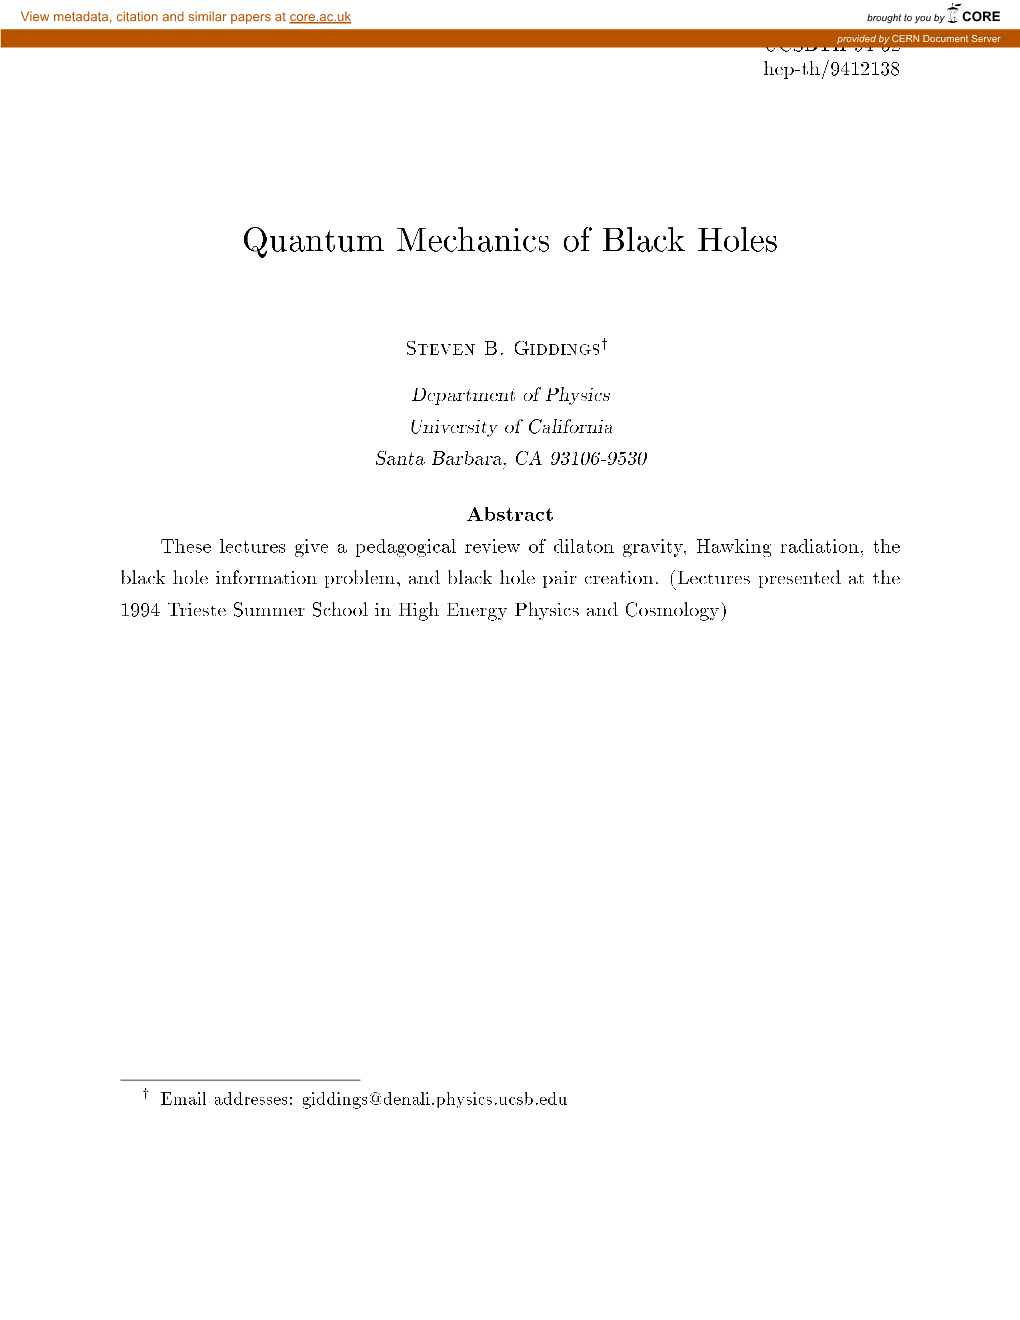 Quantum Mechanics of Black Holes